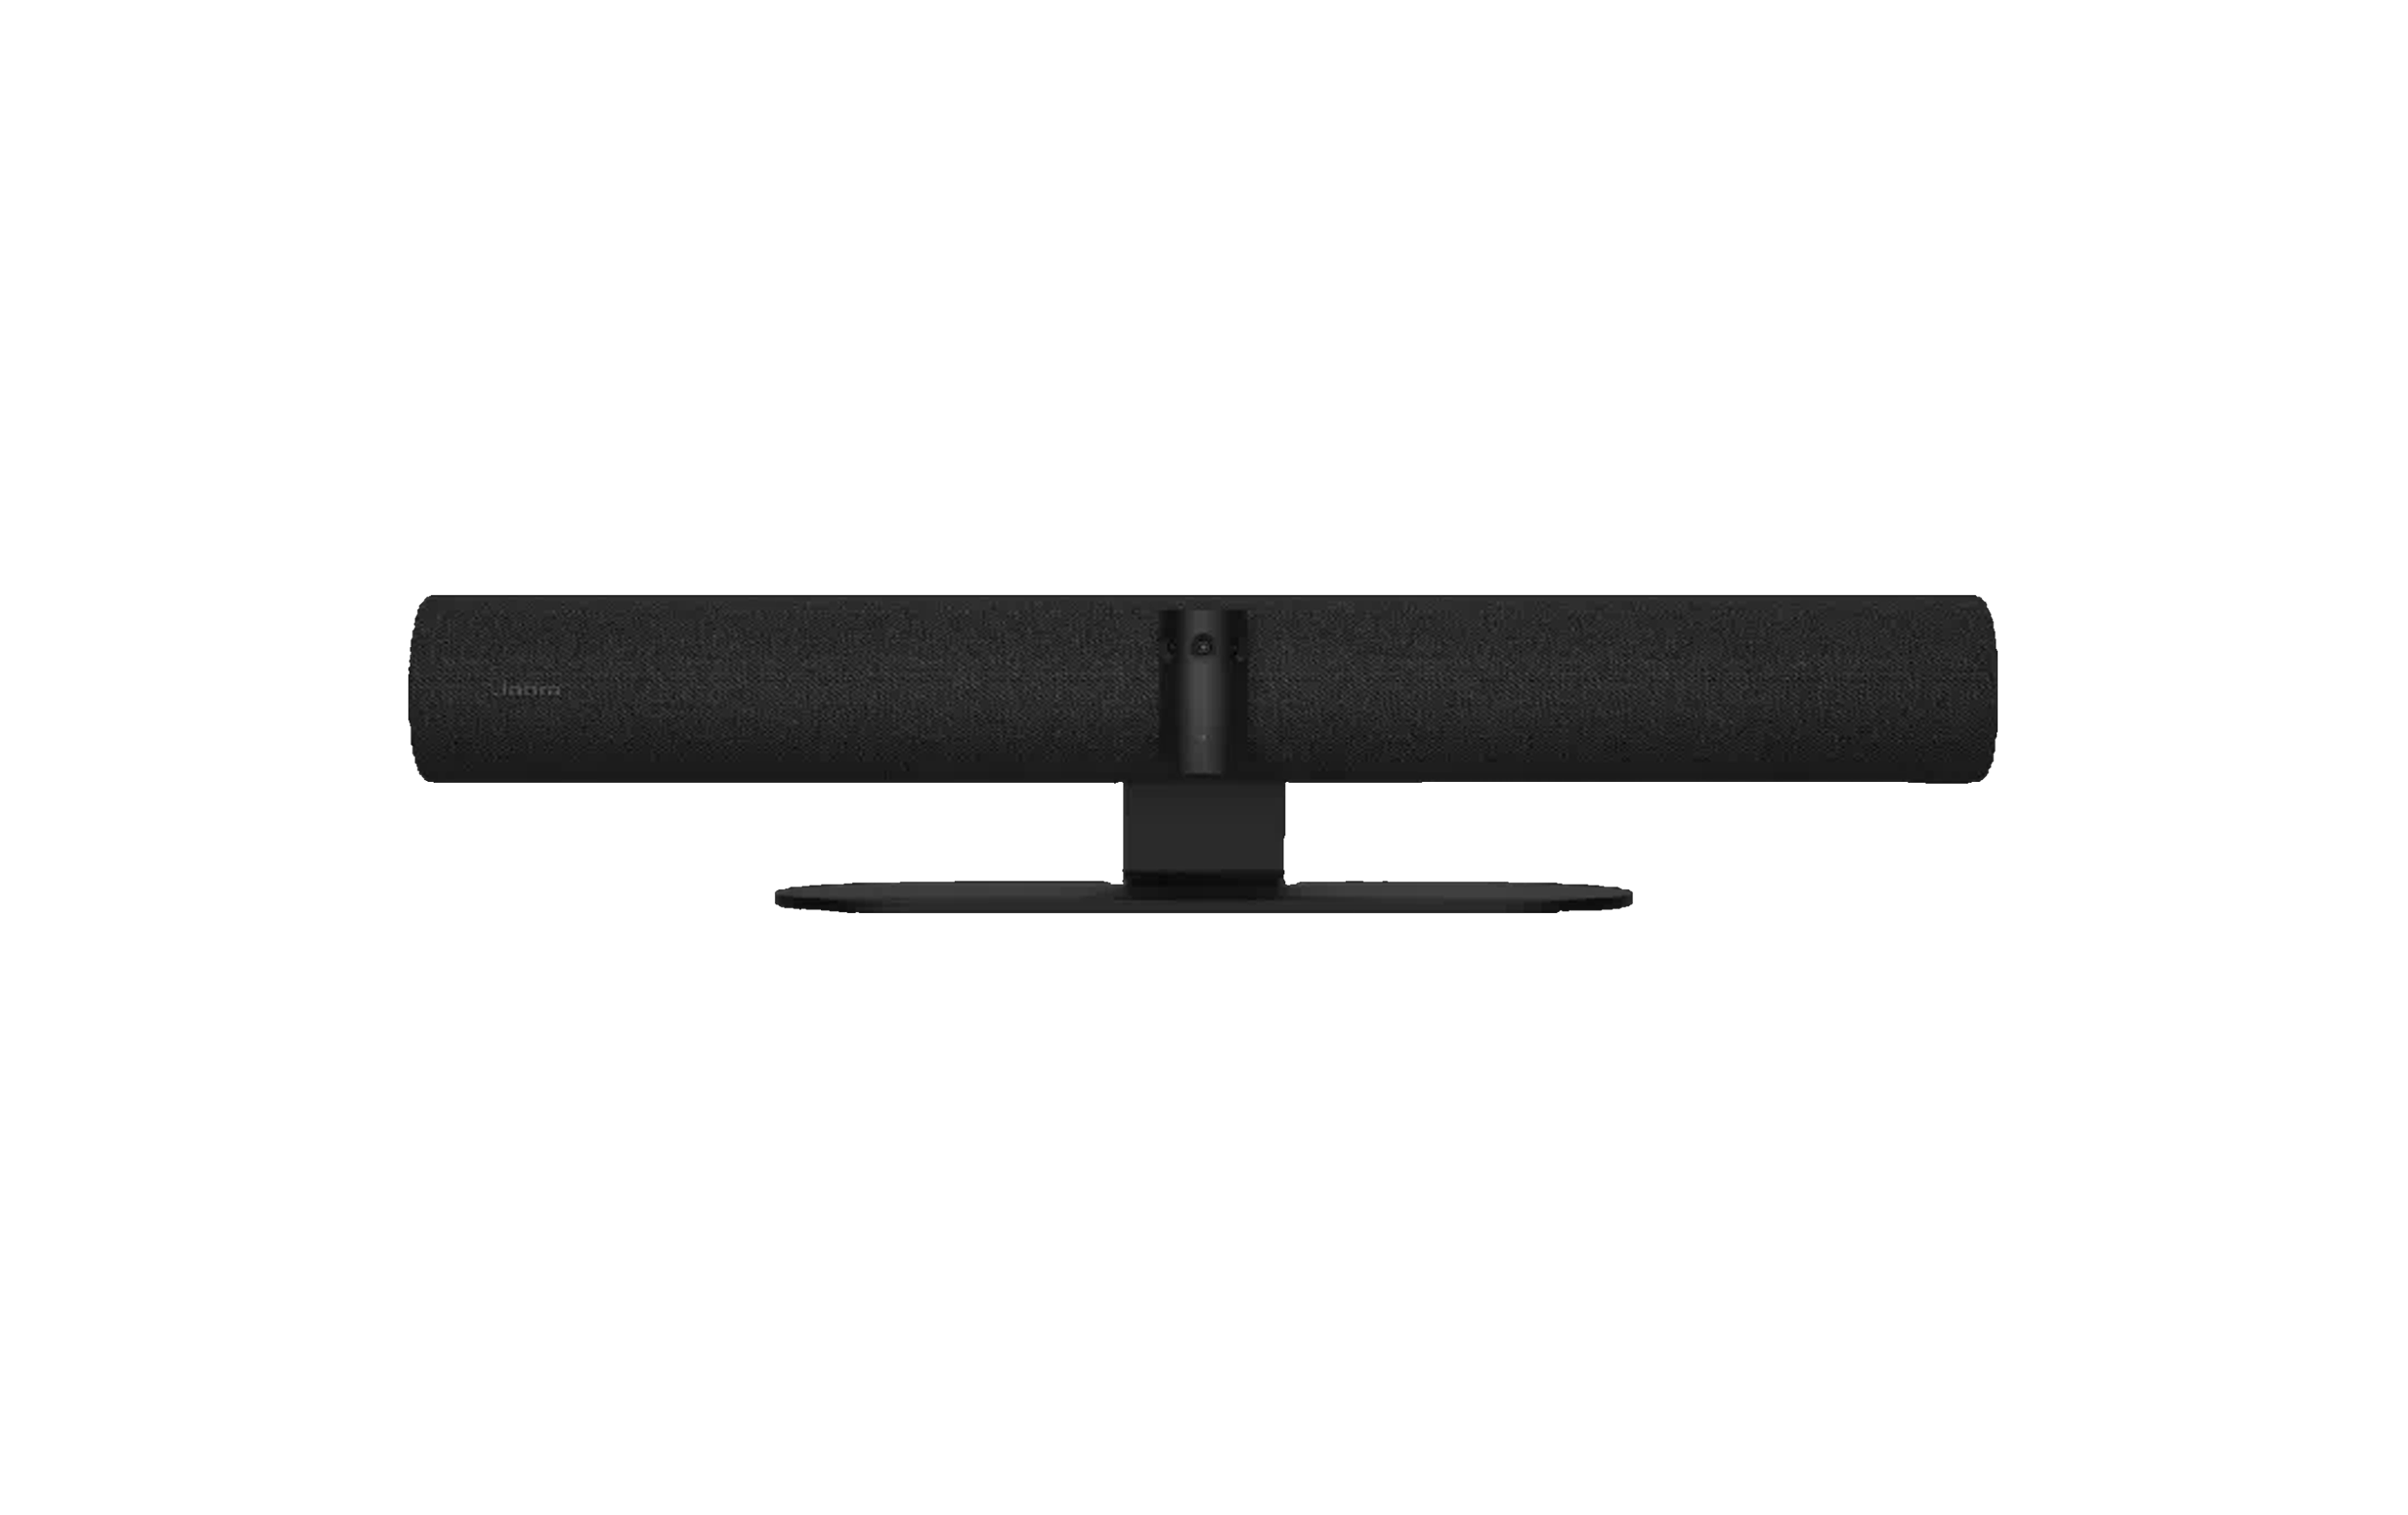 jabra panacast 50 intelligent 180° panoramic-4k video bar black icon view